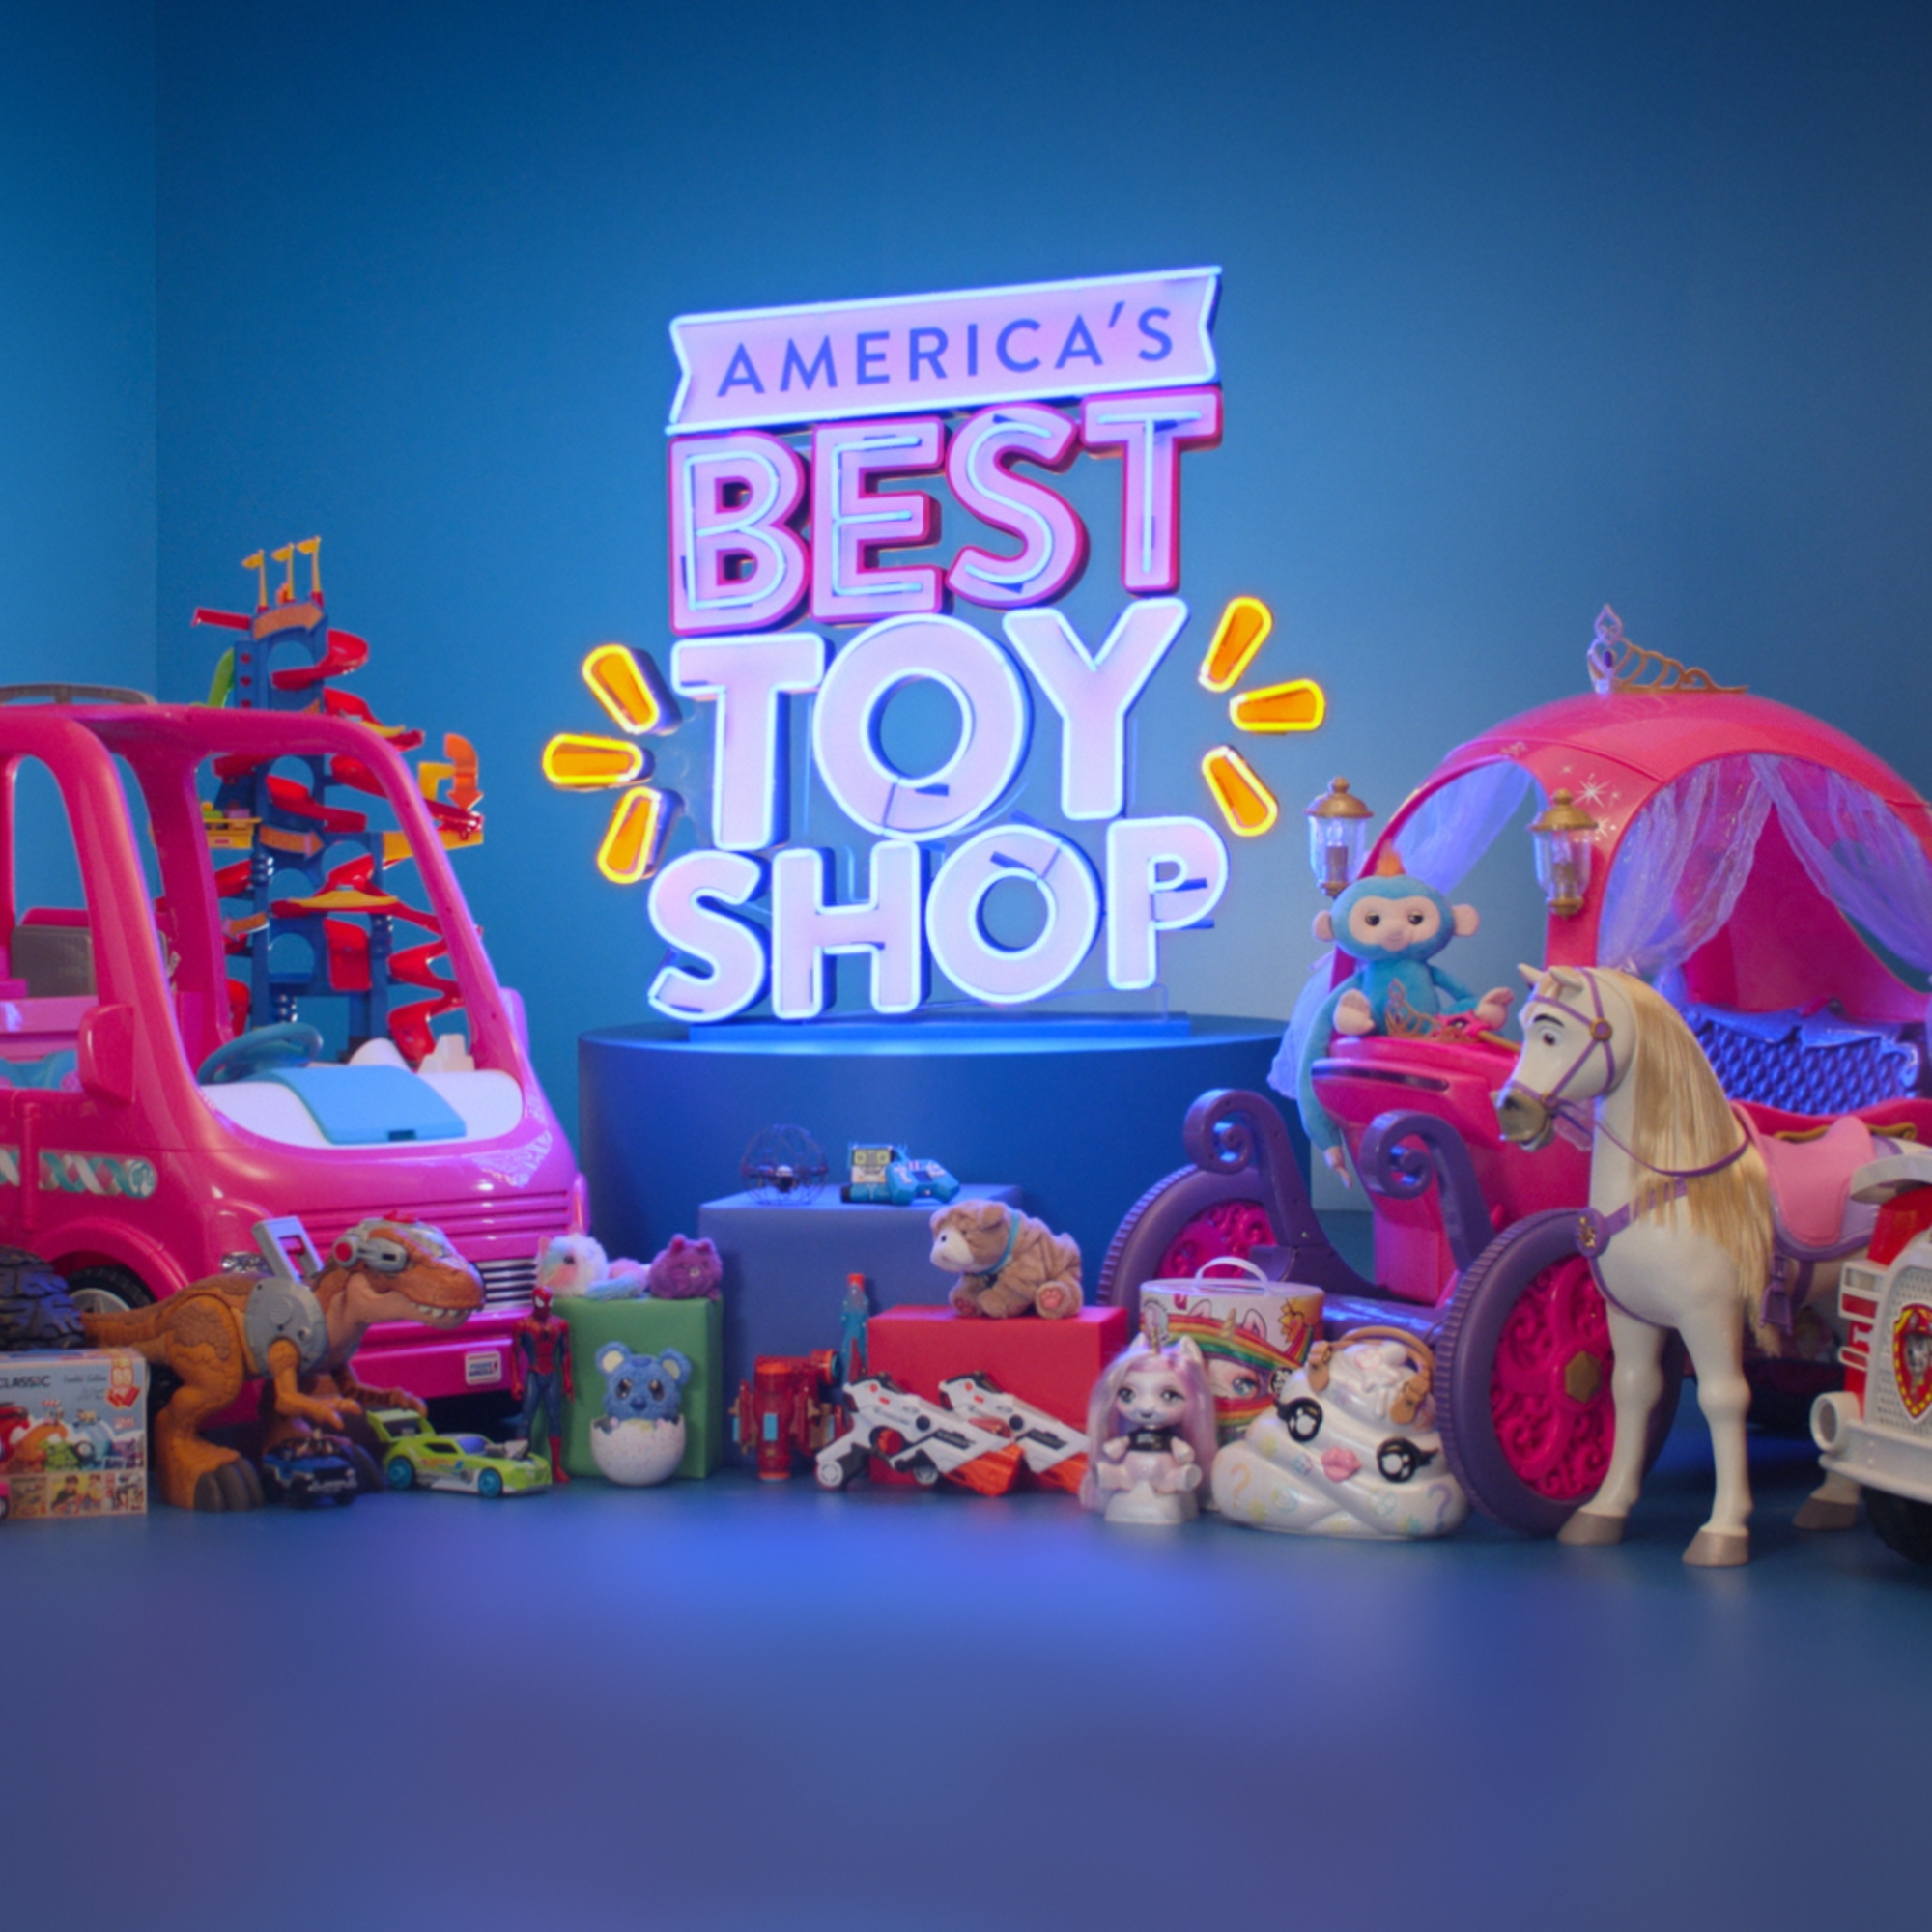 top toys 2018 walmart